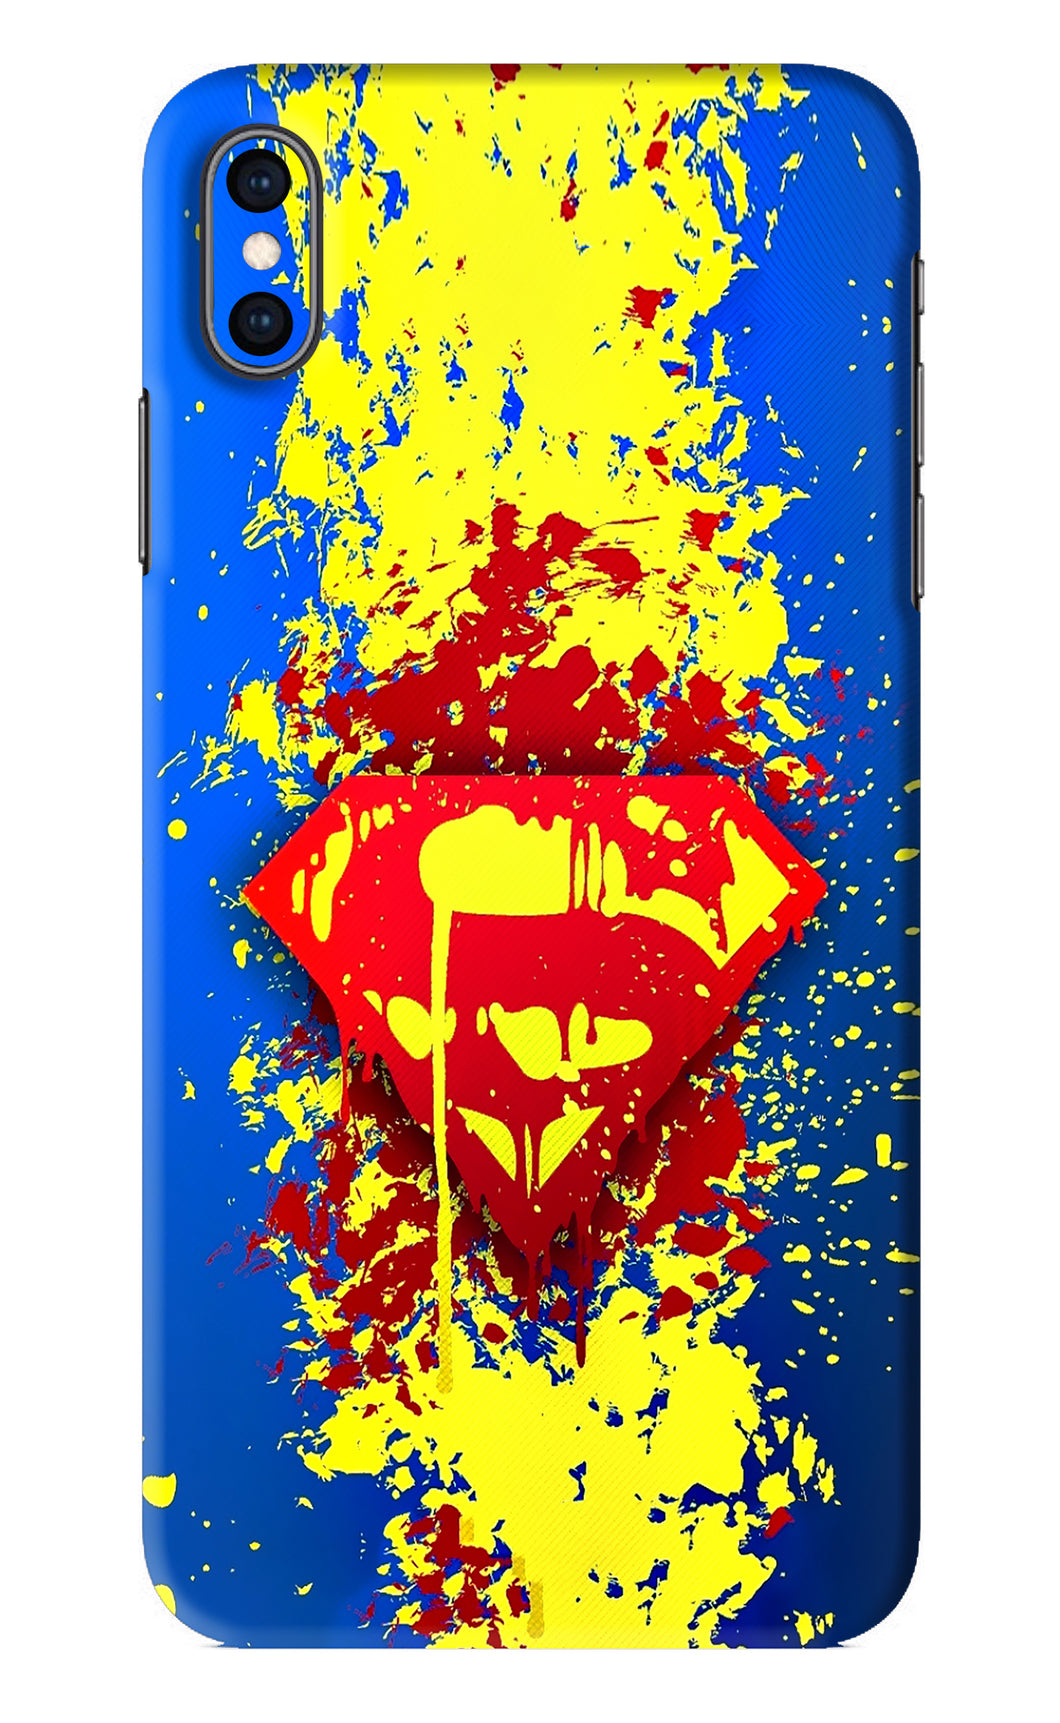 Superman logo iPhone XS Max Back Skin Wrap